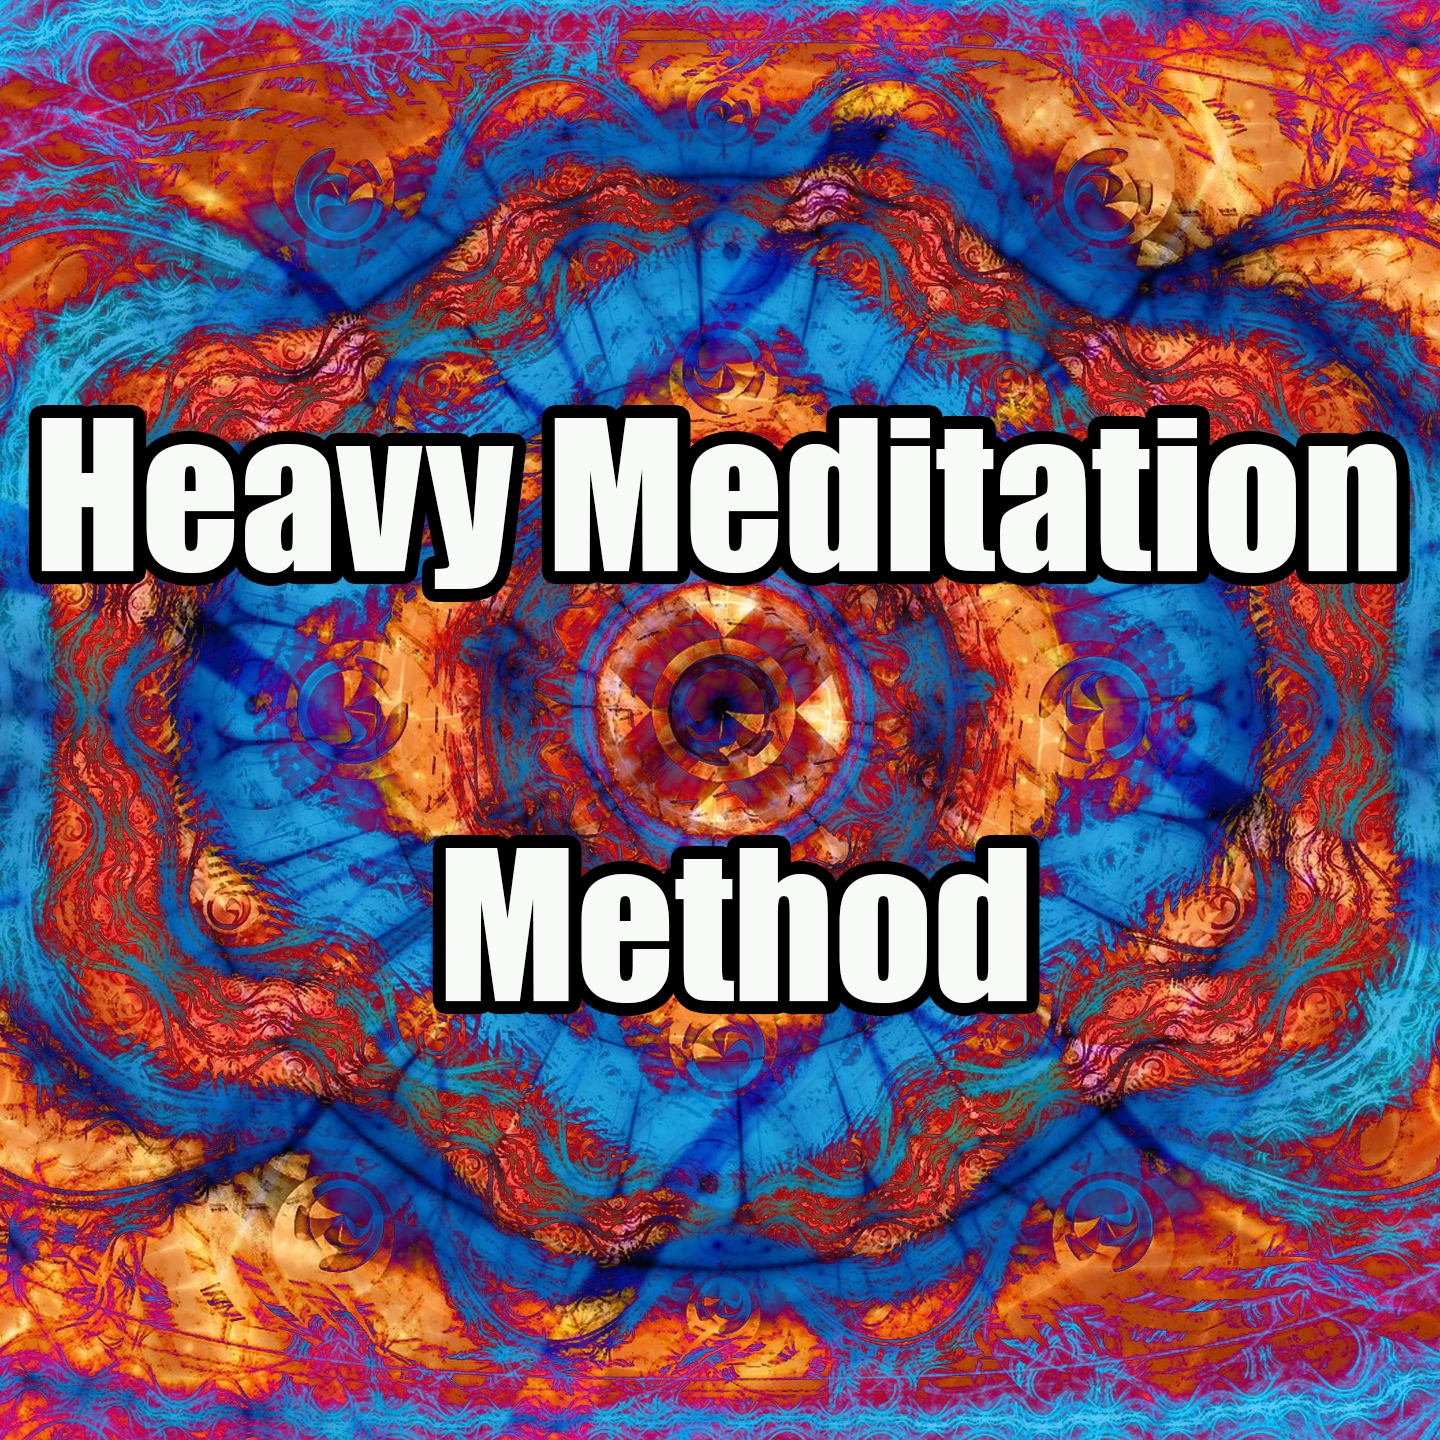 Heavy Meditation Method